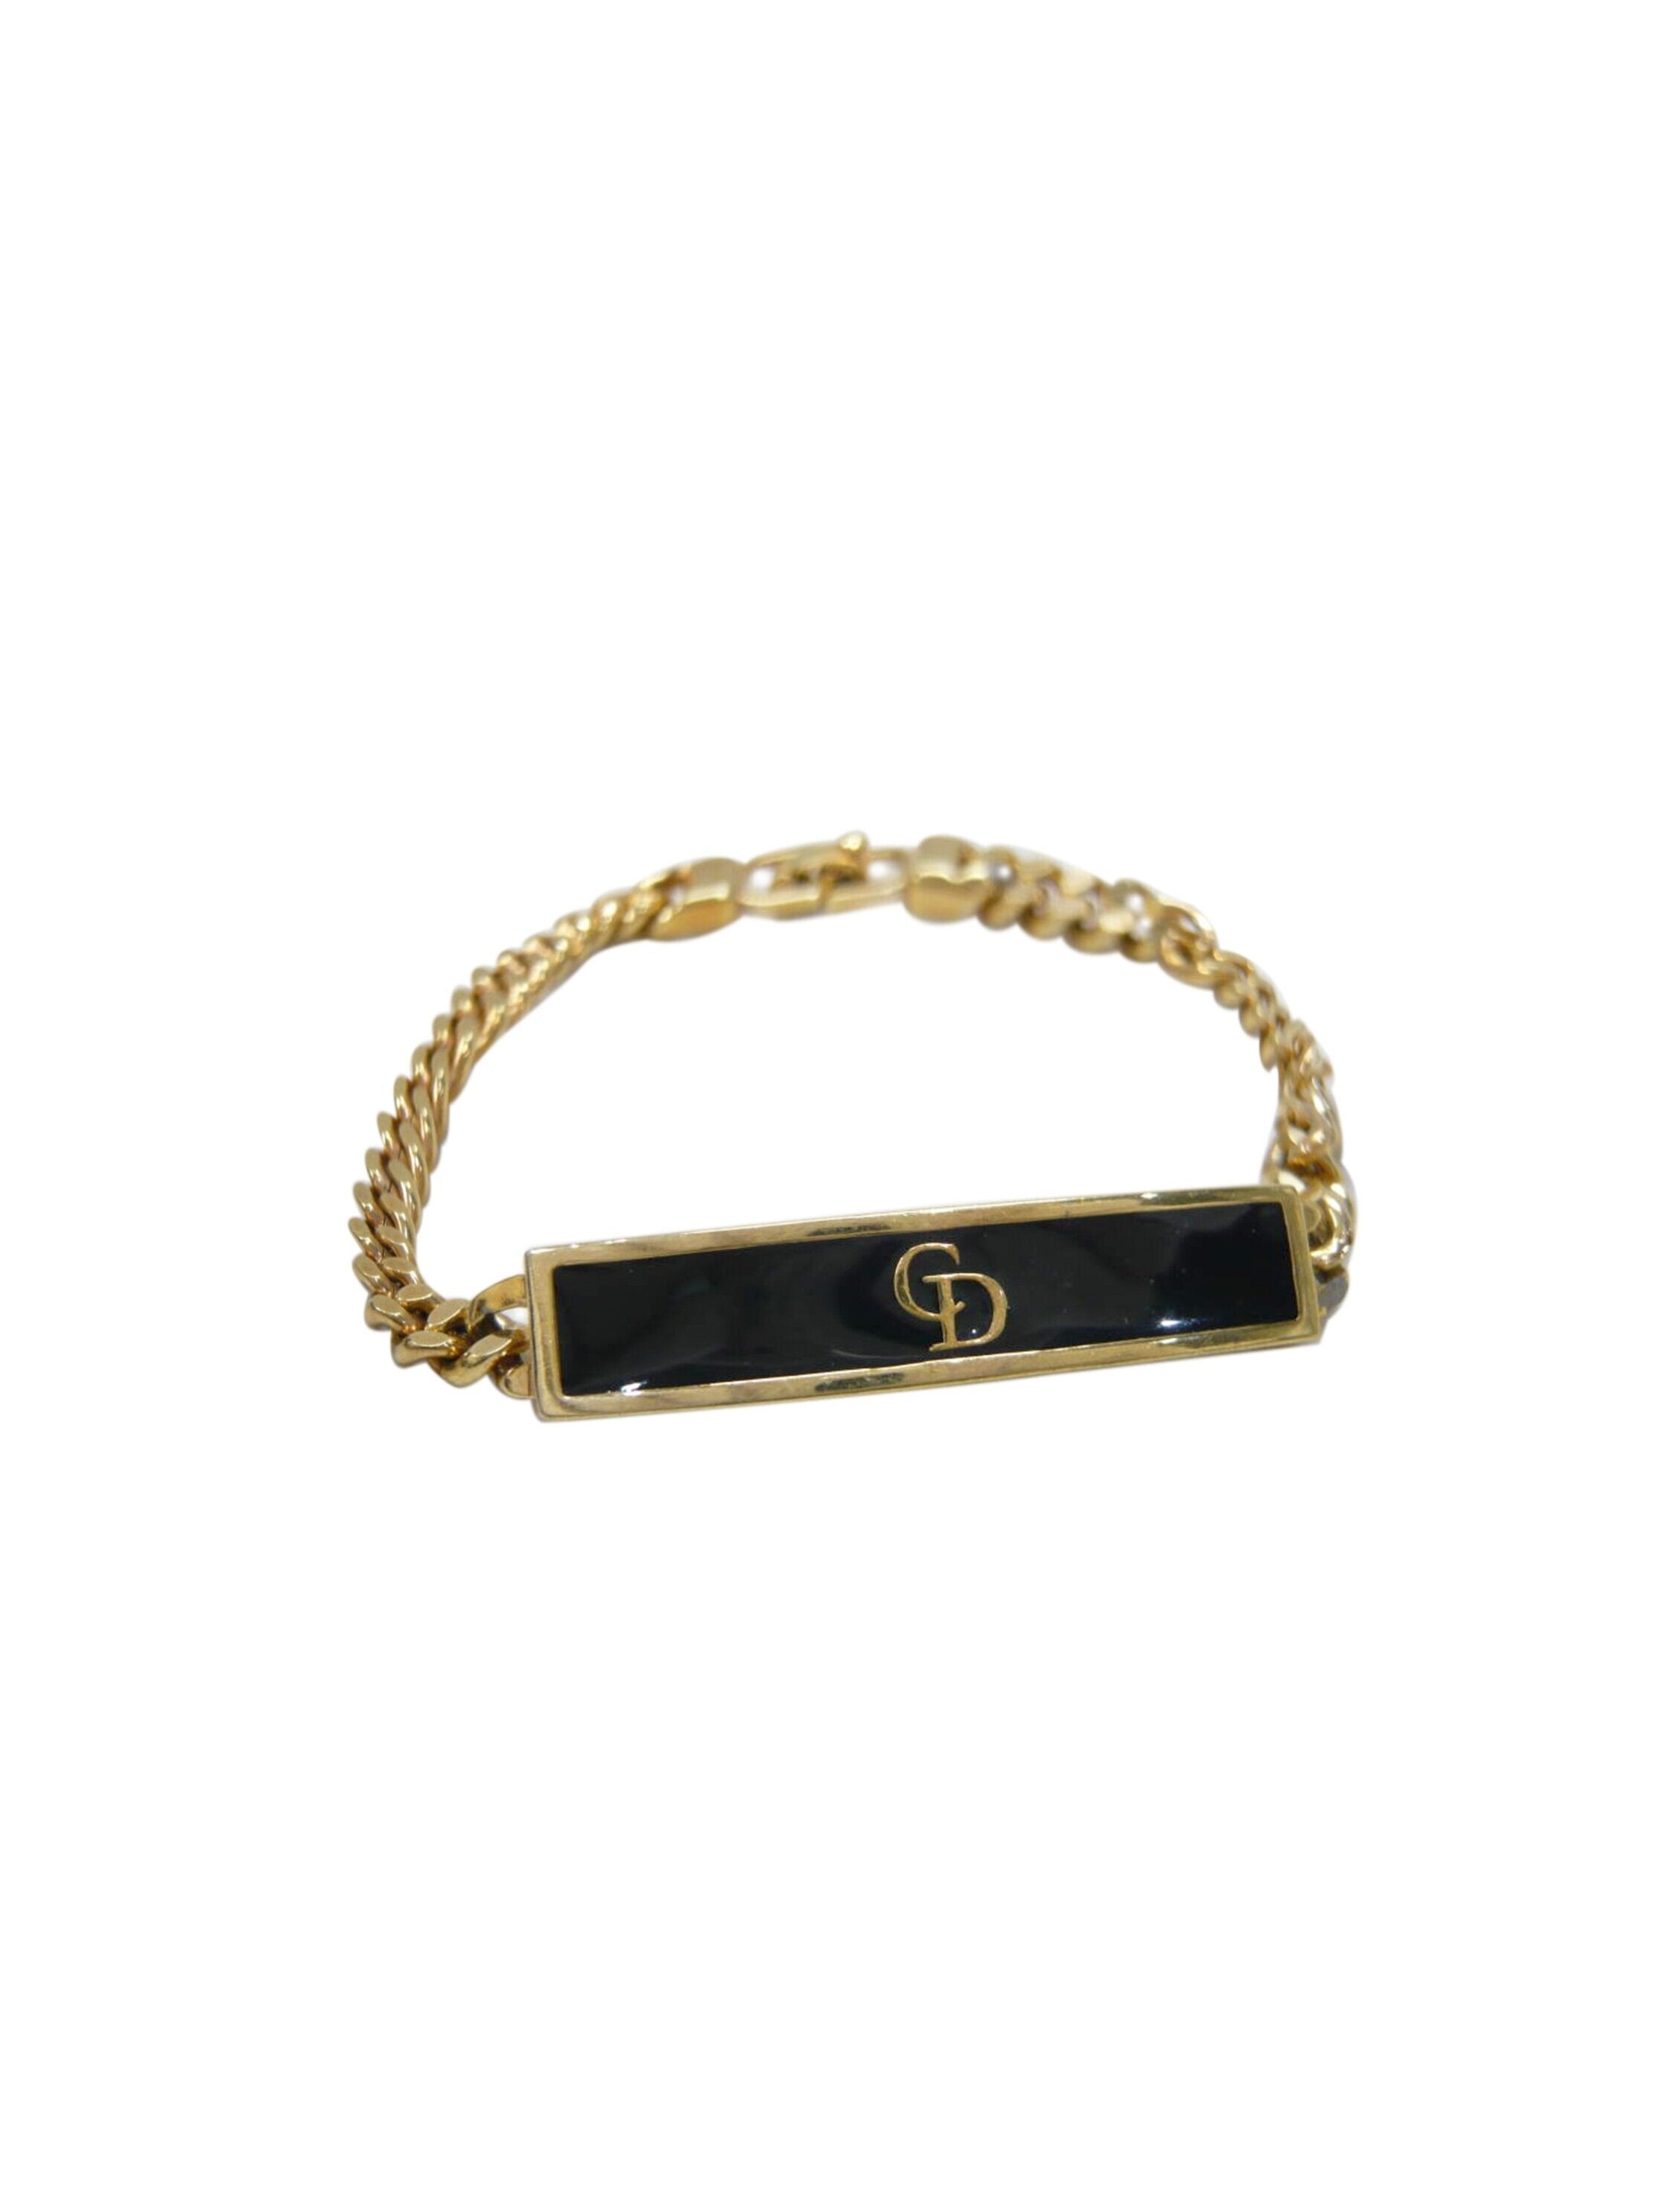 Christian Dior 2000s Gold Chunky Bracelet